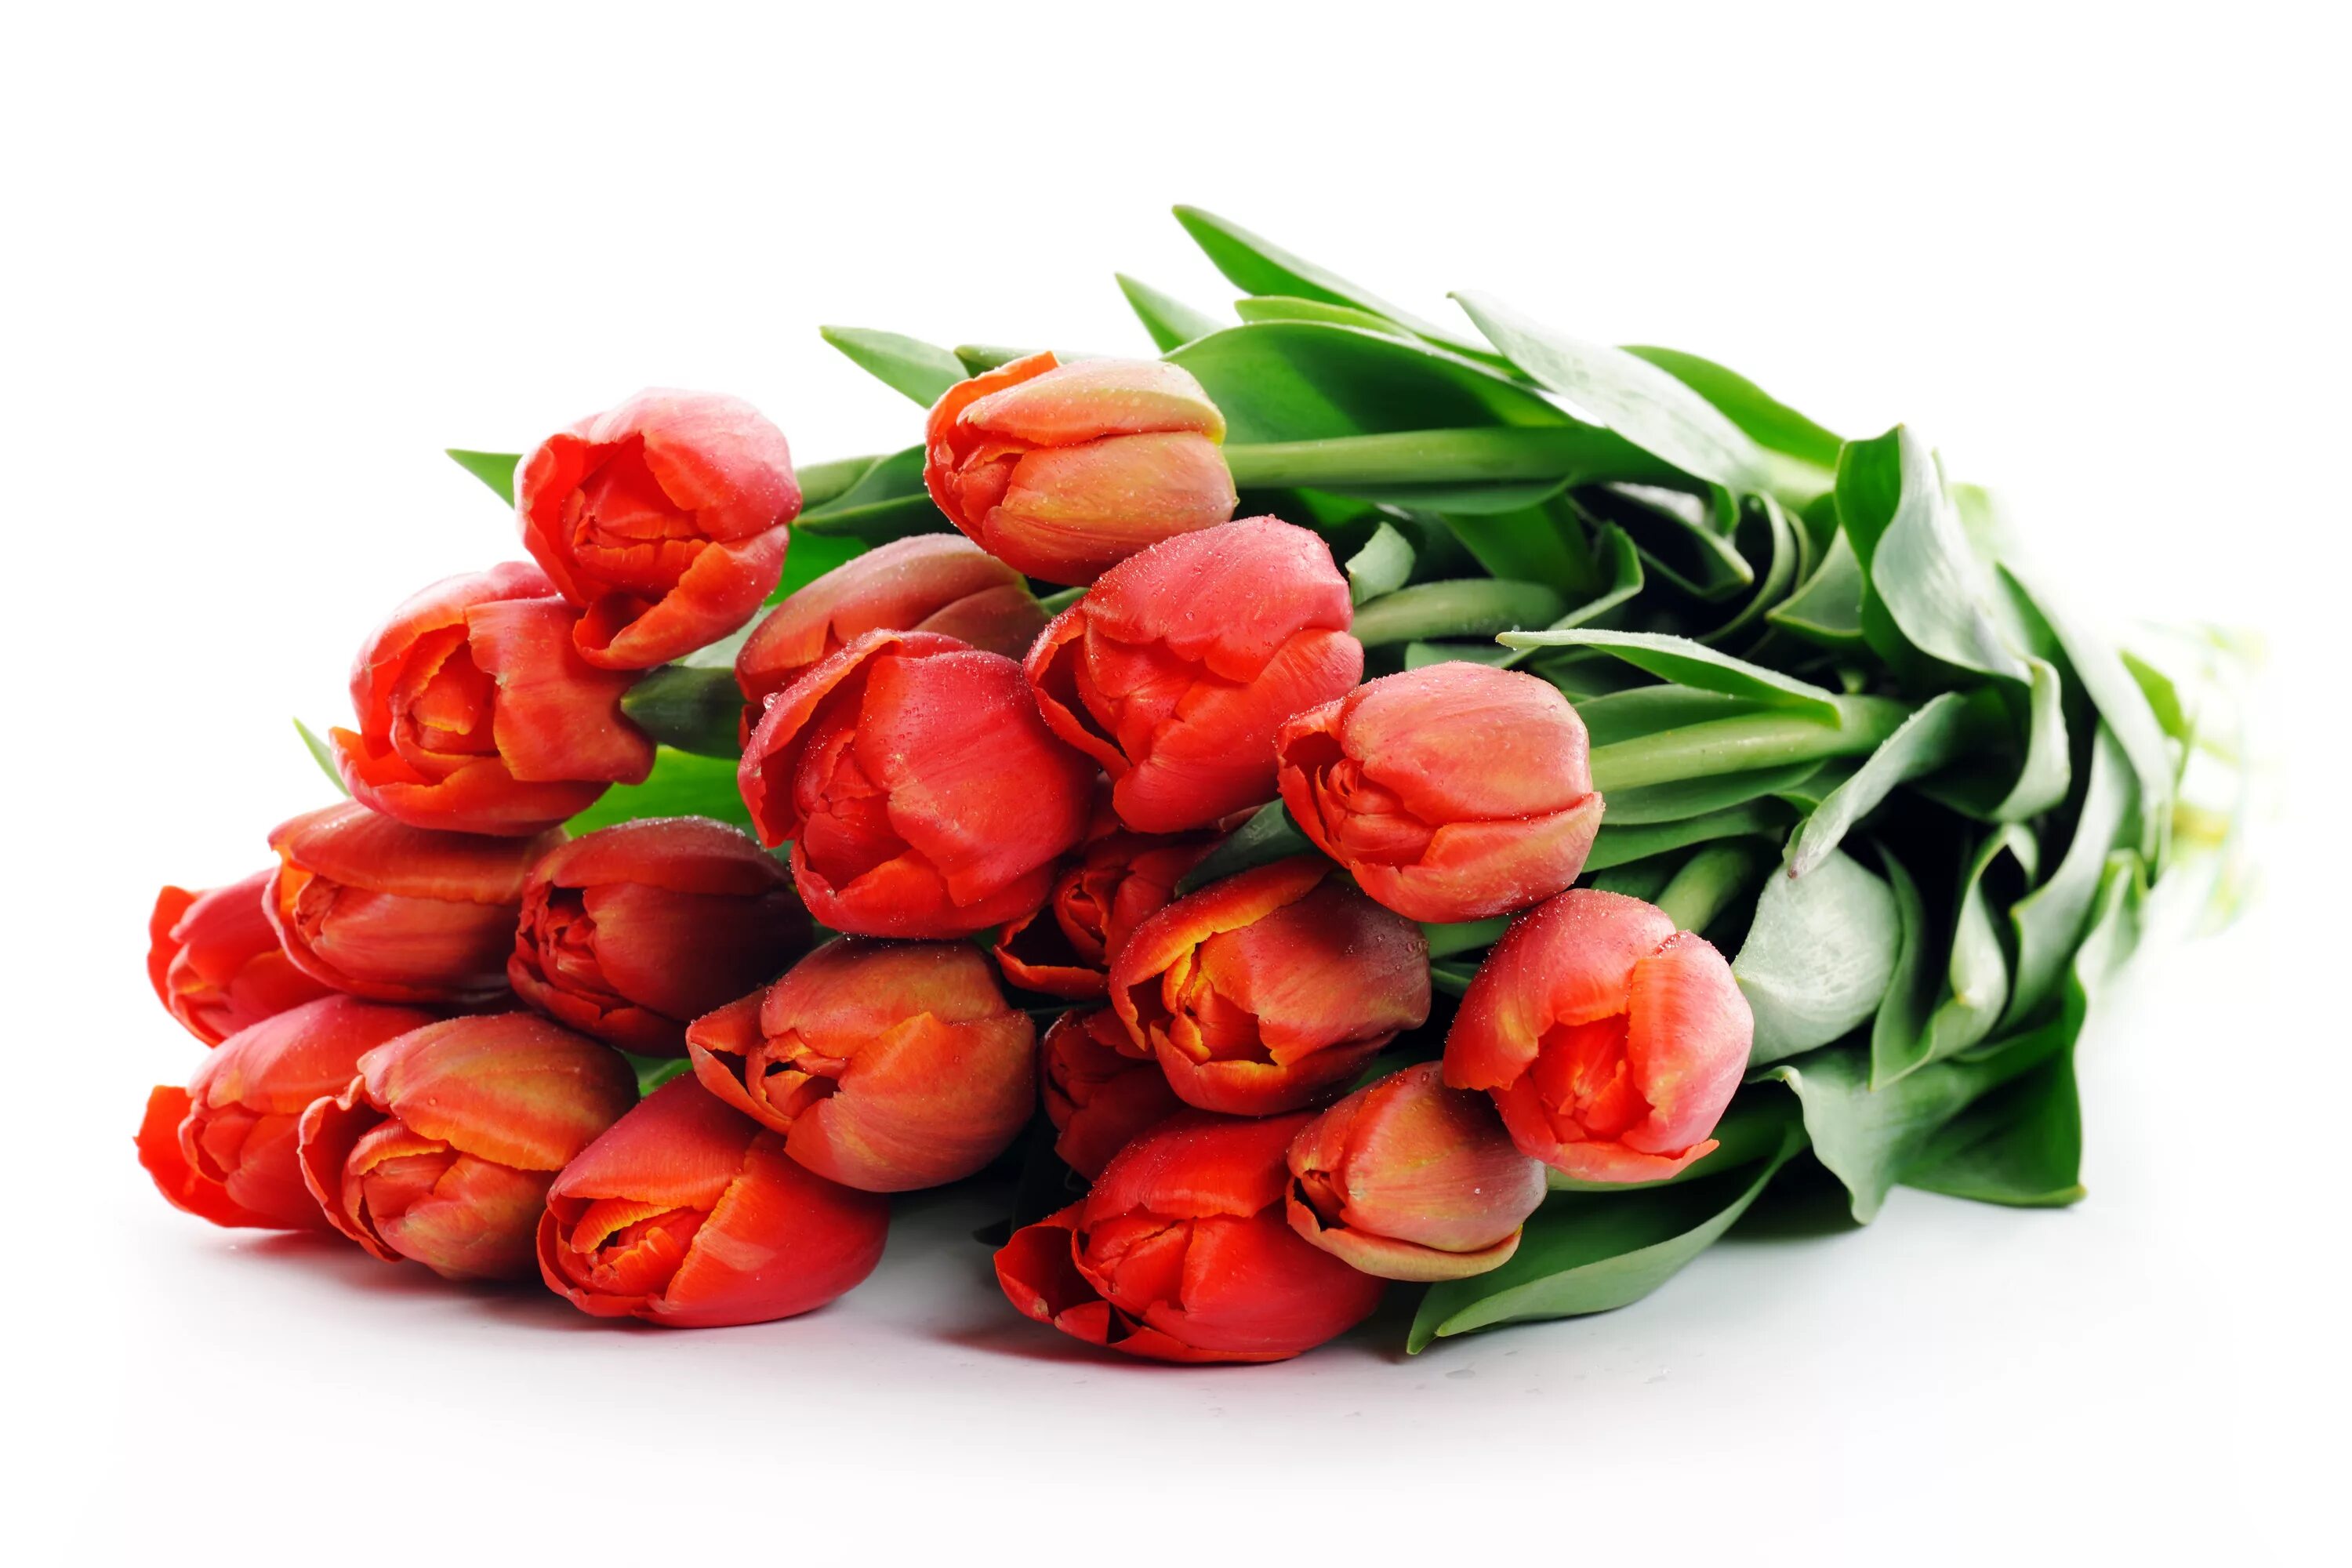 Цветы тюльпаны. Букет тюльпанов. Красивые тюльпаны. Открытки букеты тюльпанов красивые